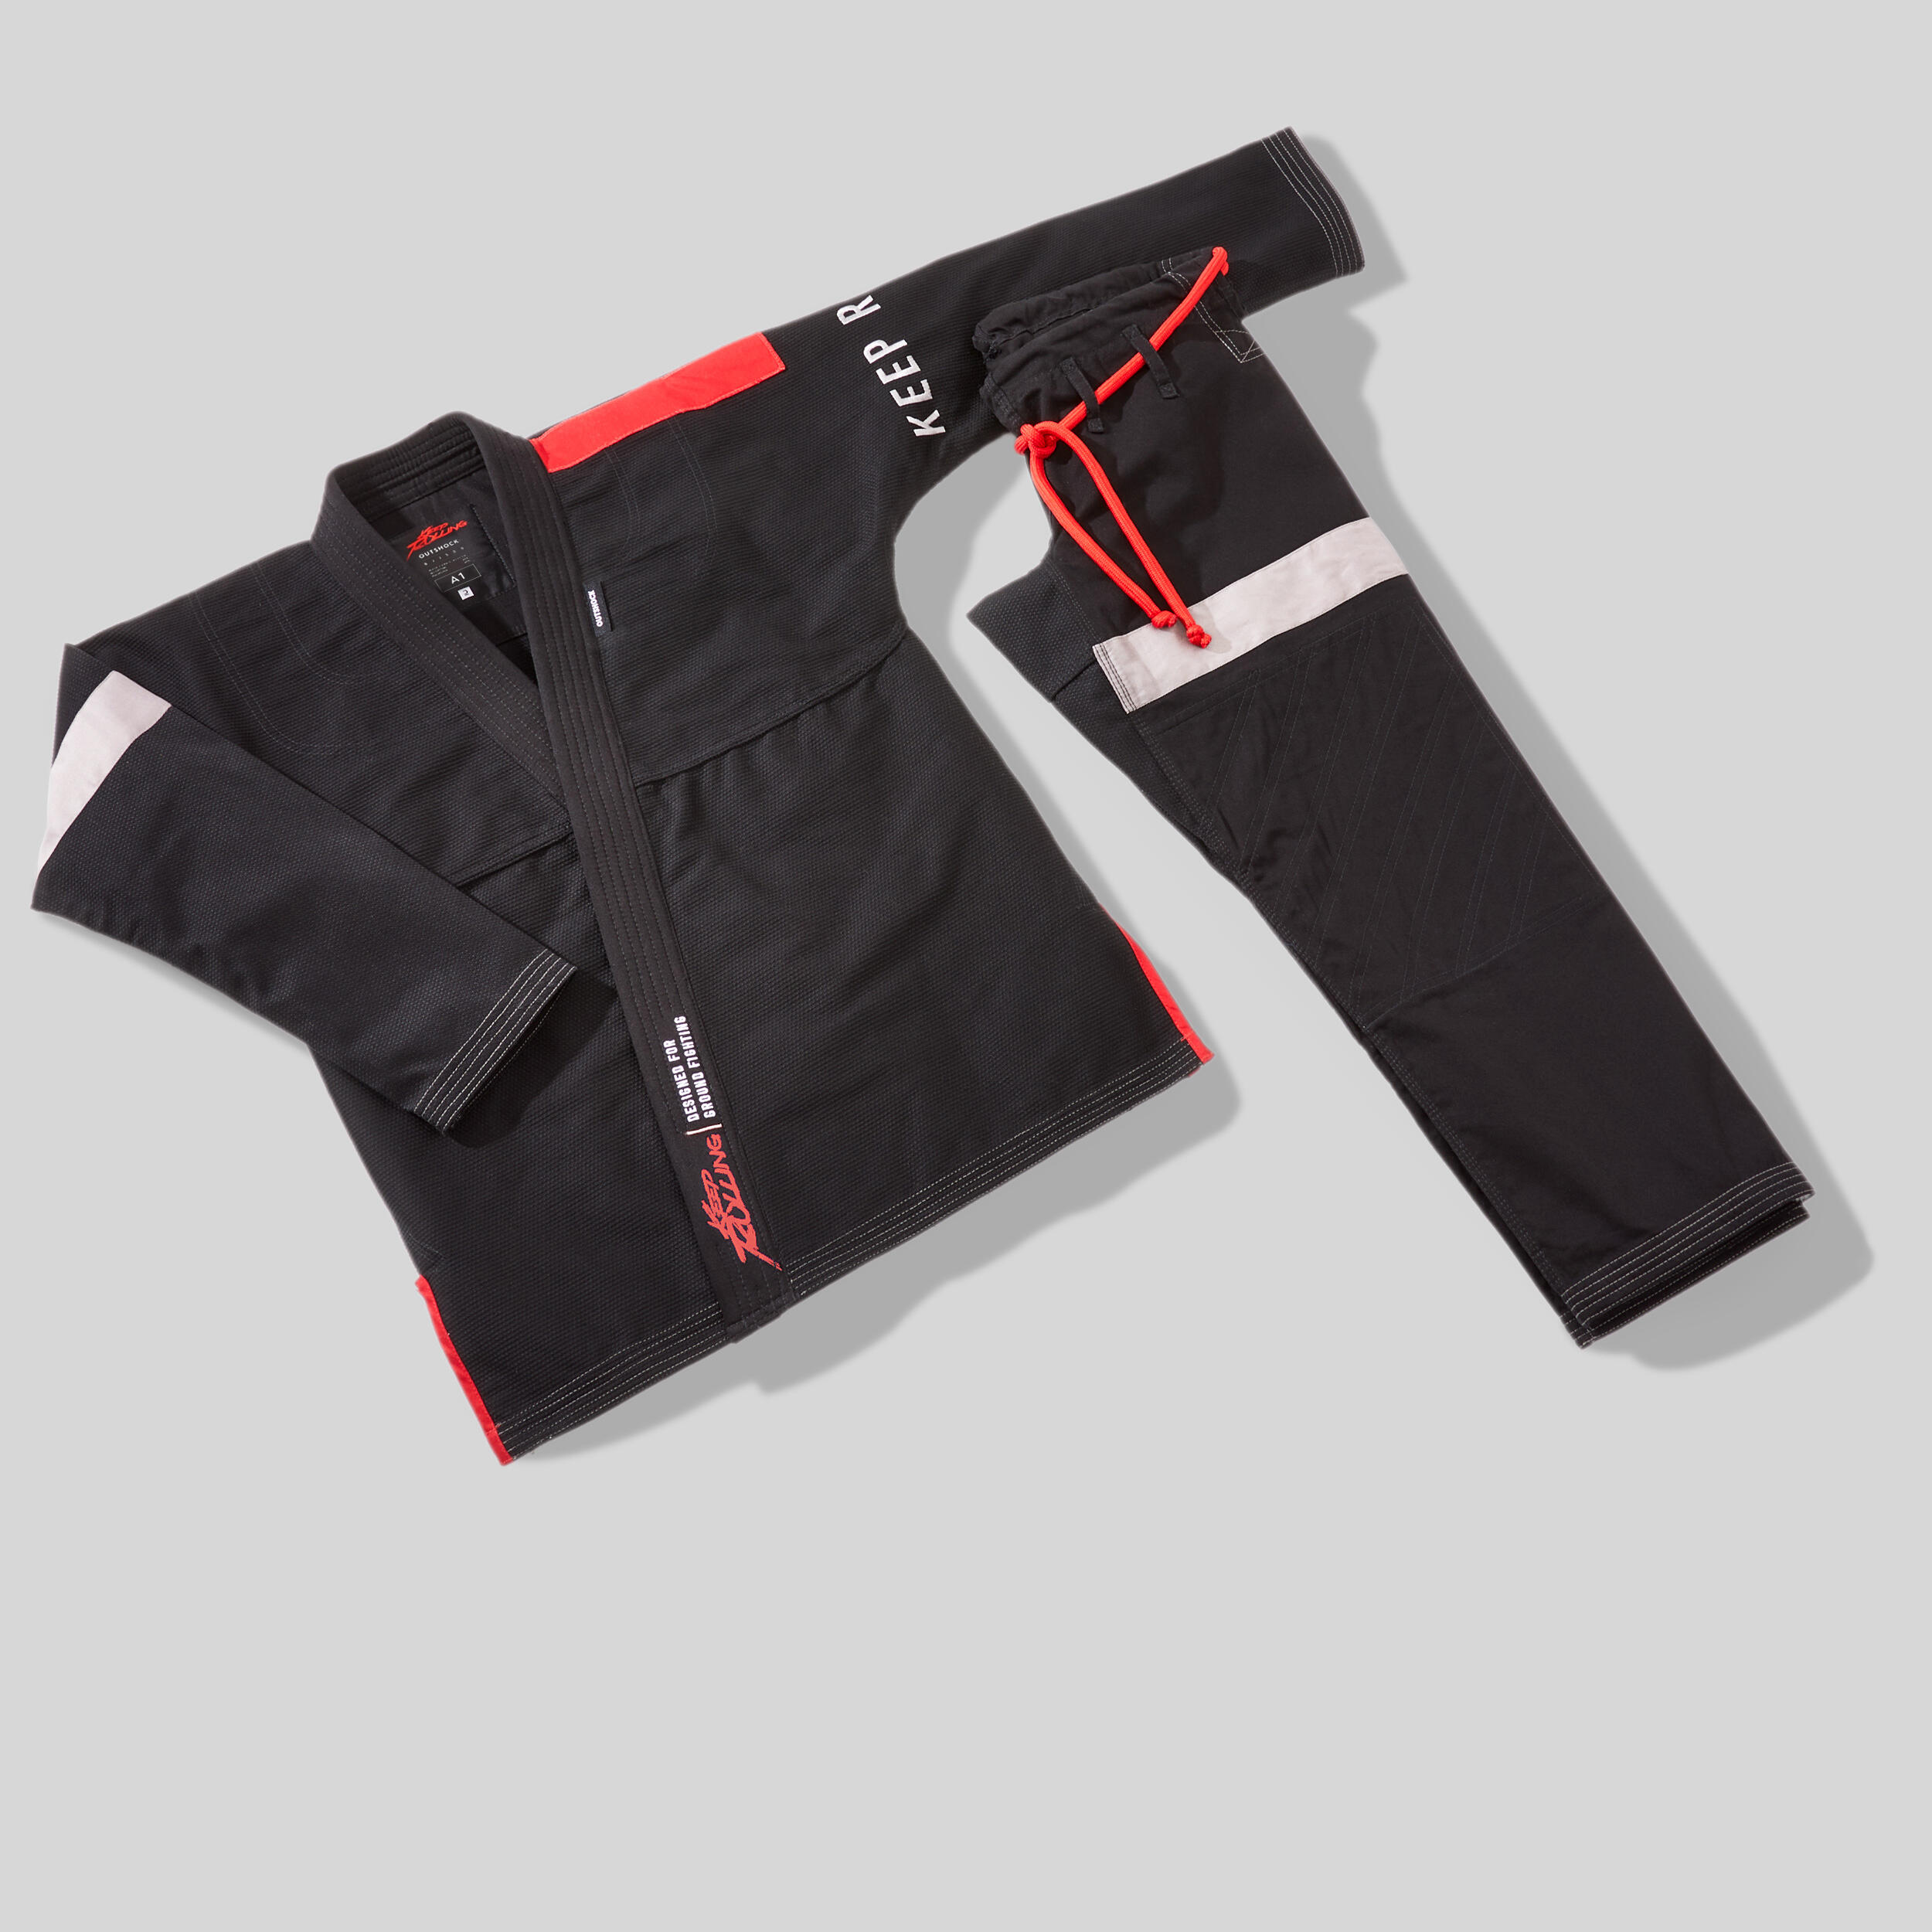 500 Brazilian Jiu-Jitsu Adult Uniform - Black 4/9